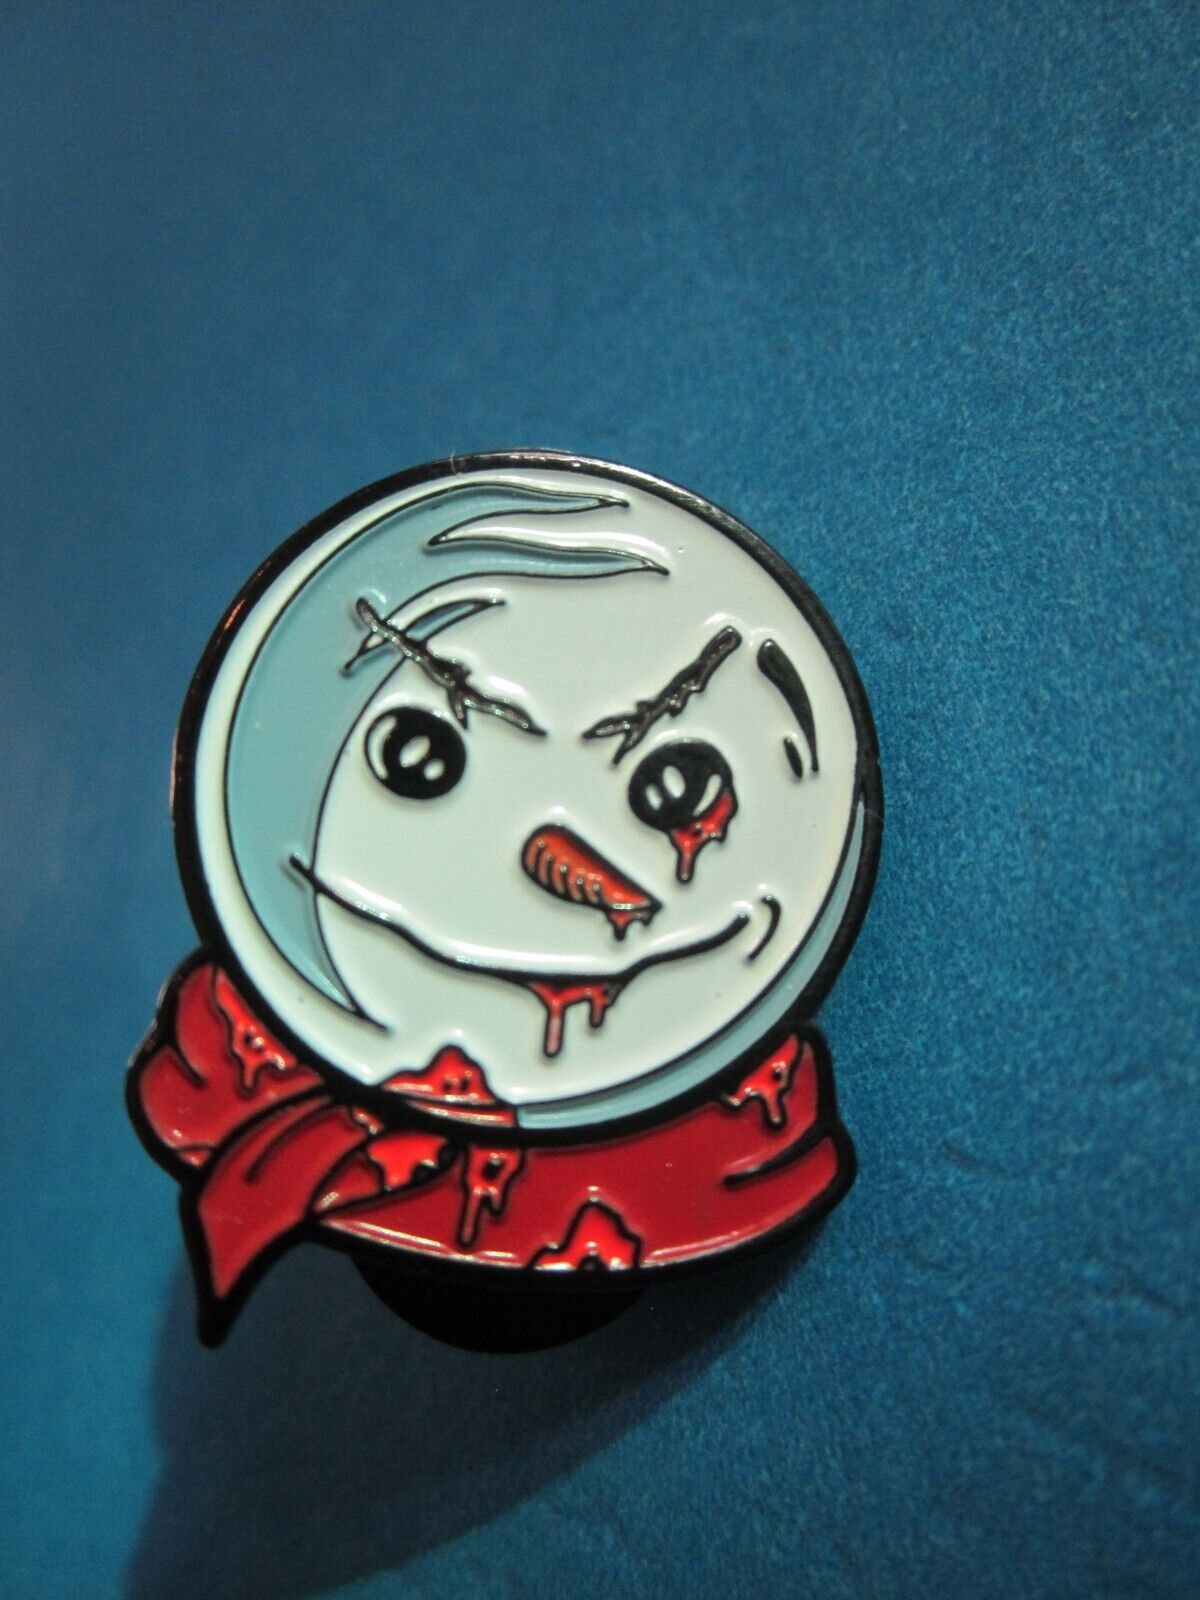 Jack Frost Snowman Enamel Pin Ratknife Horror Collectible